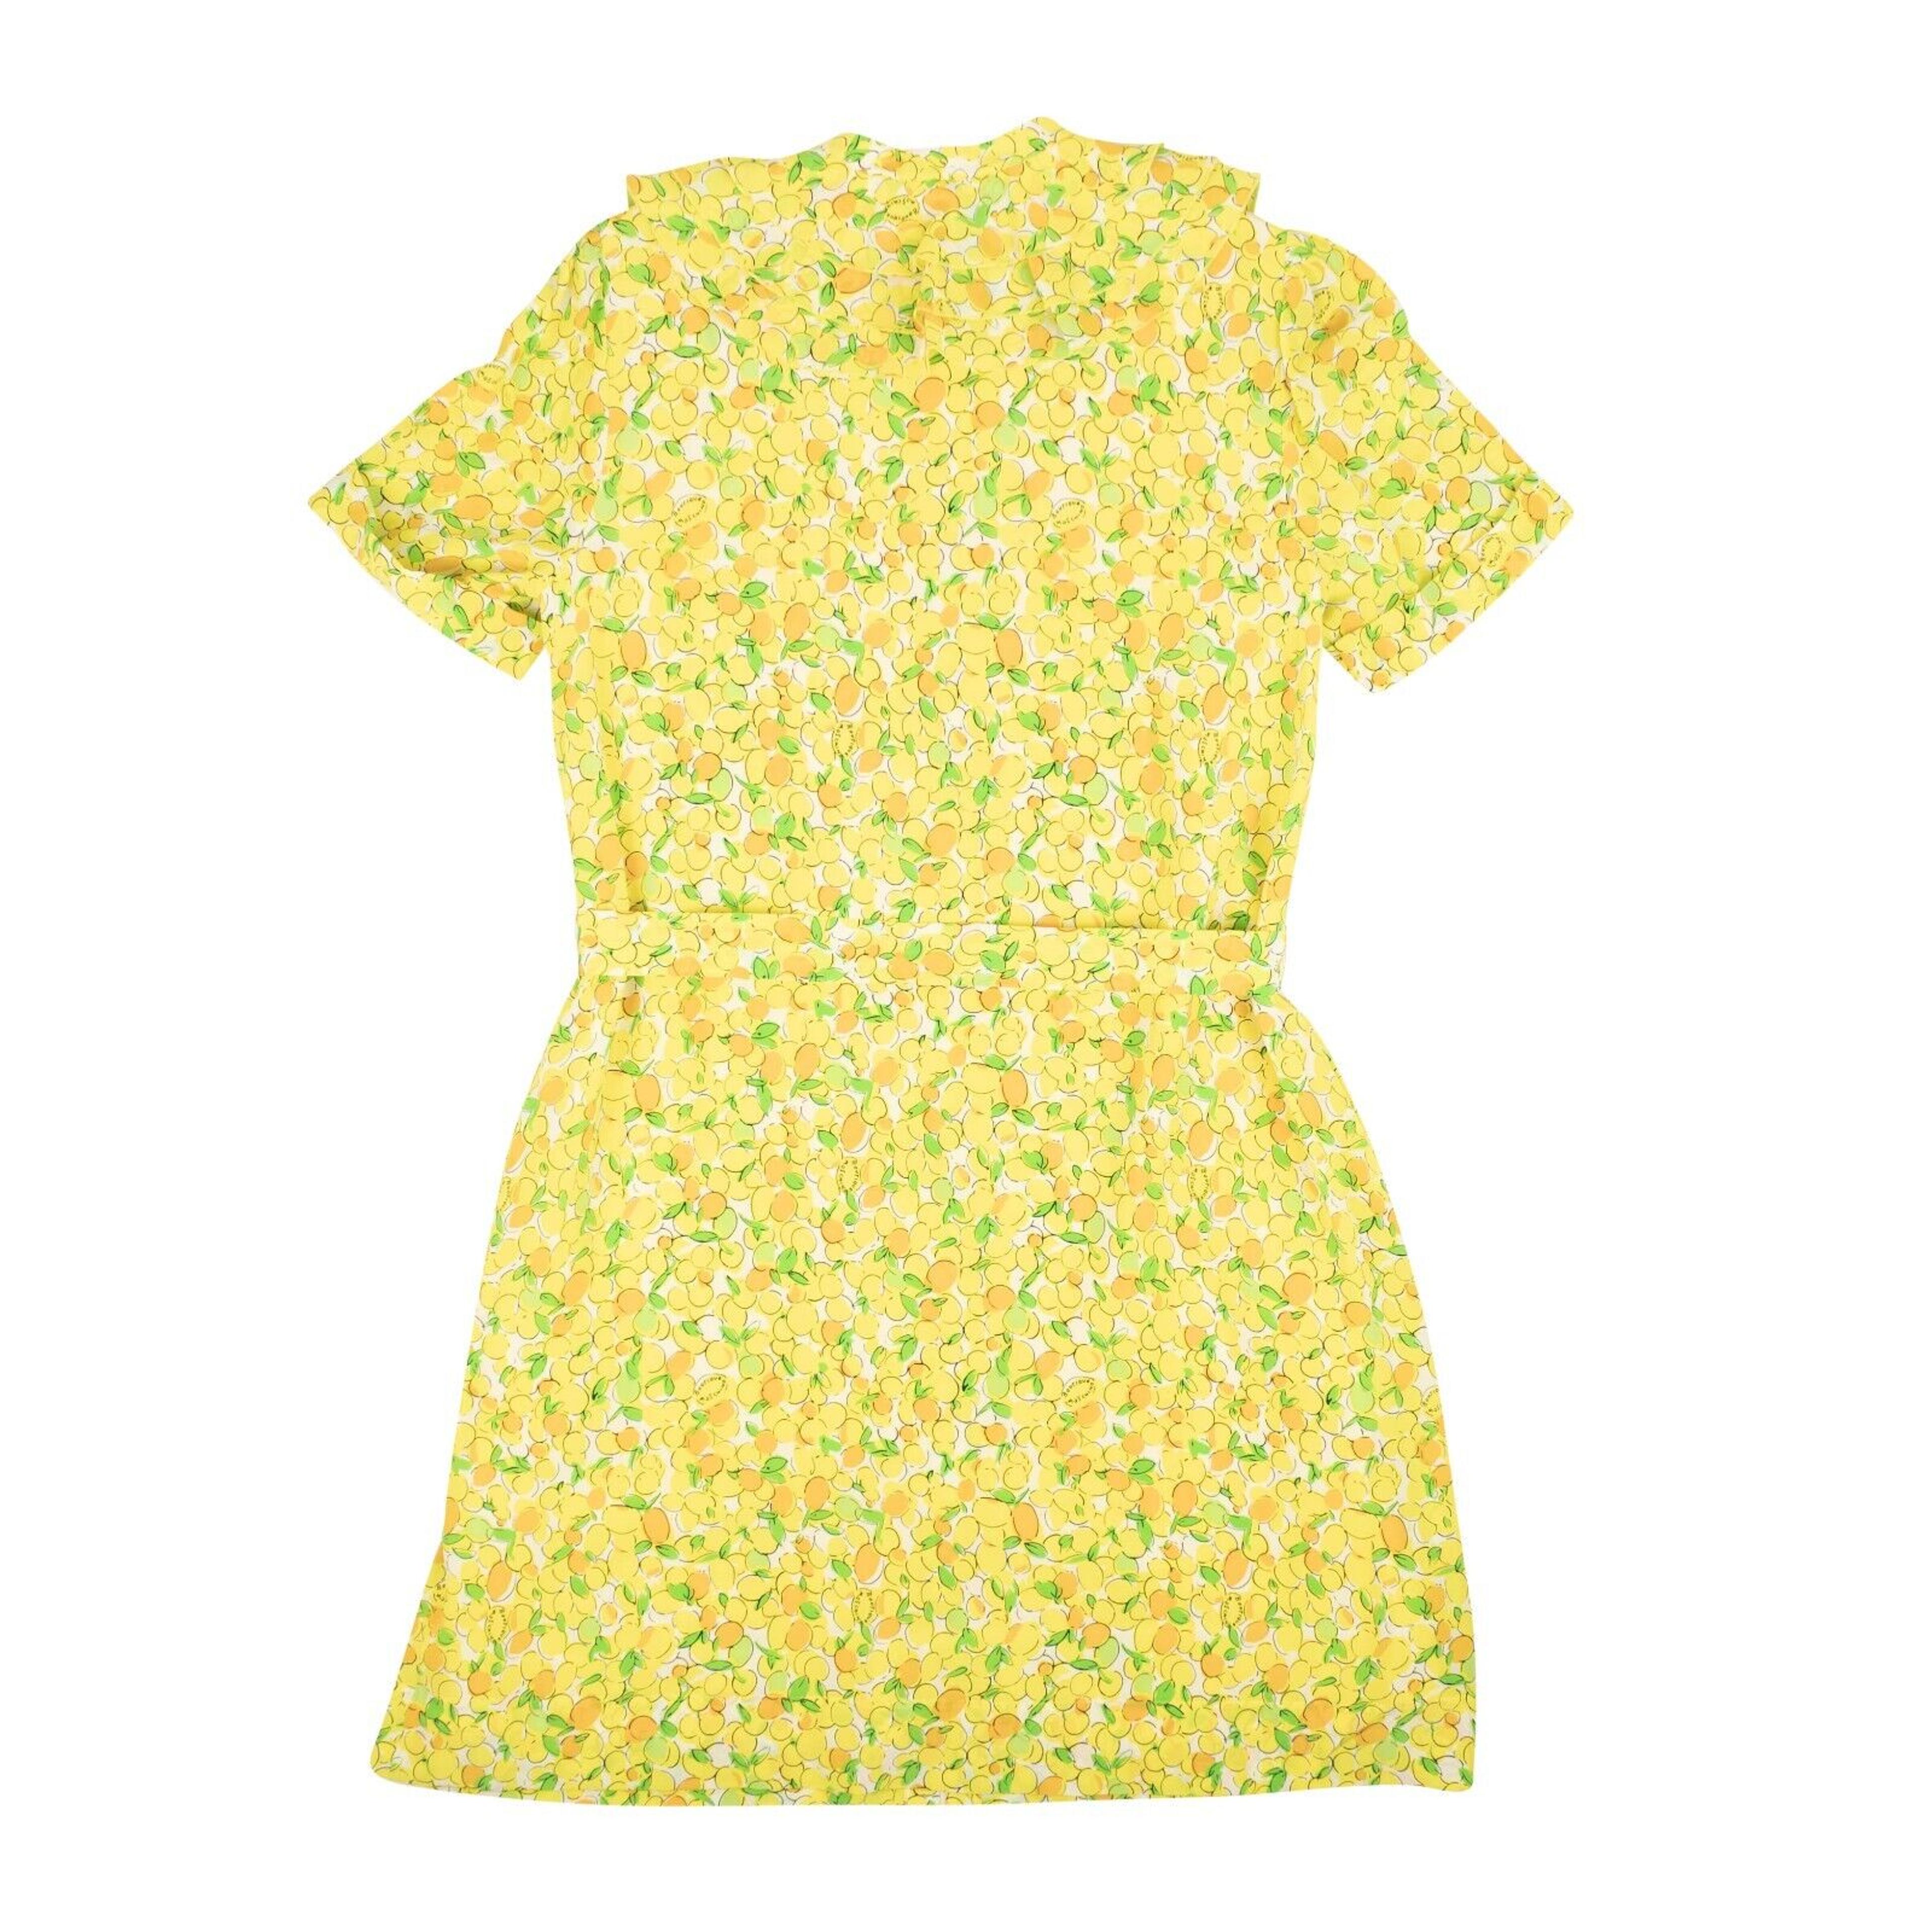 Alternate View 2 of Yellow Lemon Print Silk Ruffle Neck Dress